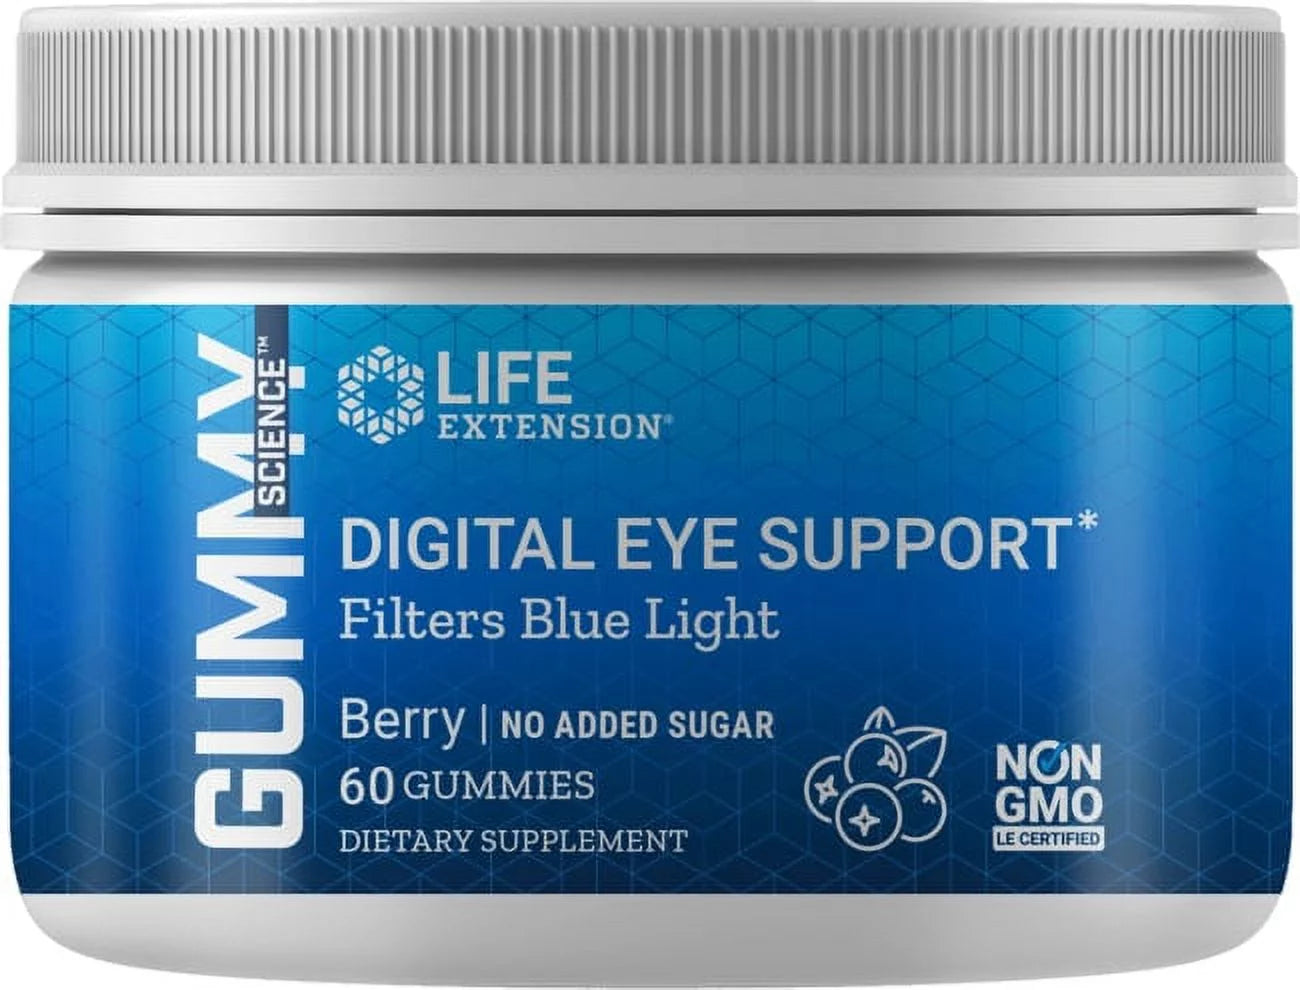 Digital Eye Support Gummies by Life Extension, 60 gummies